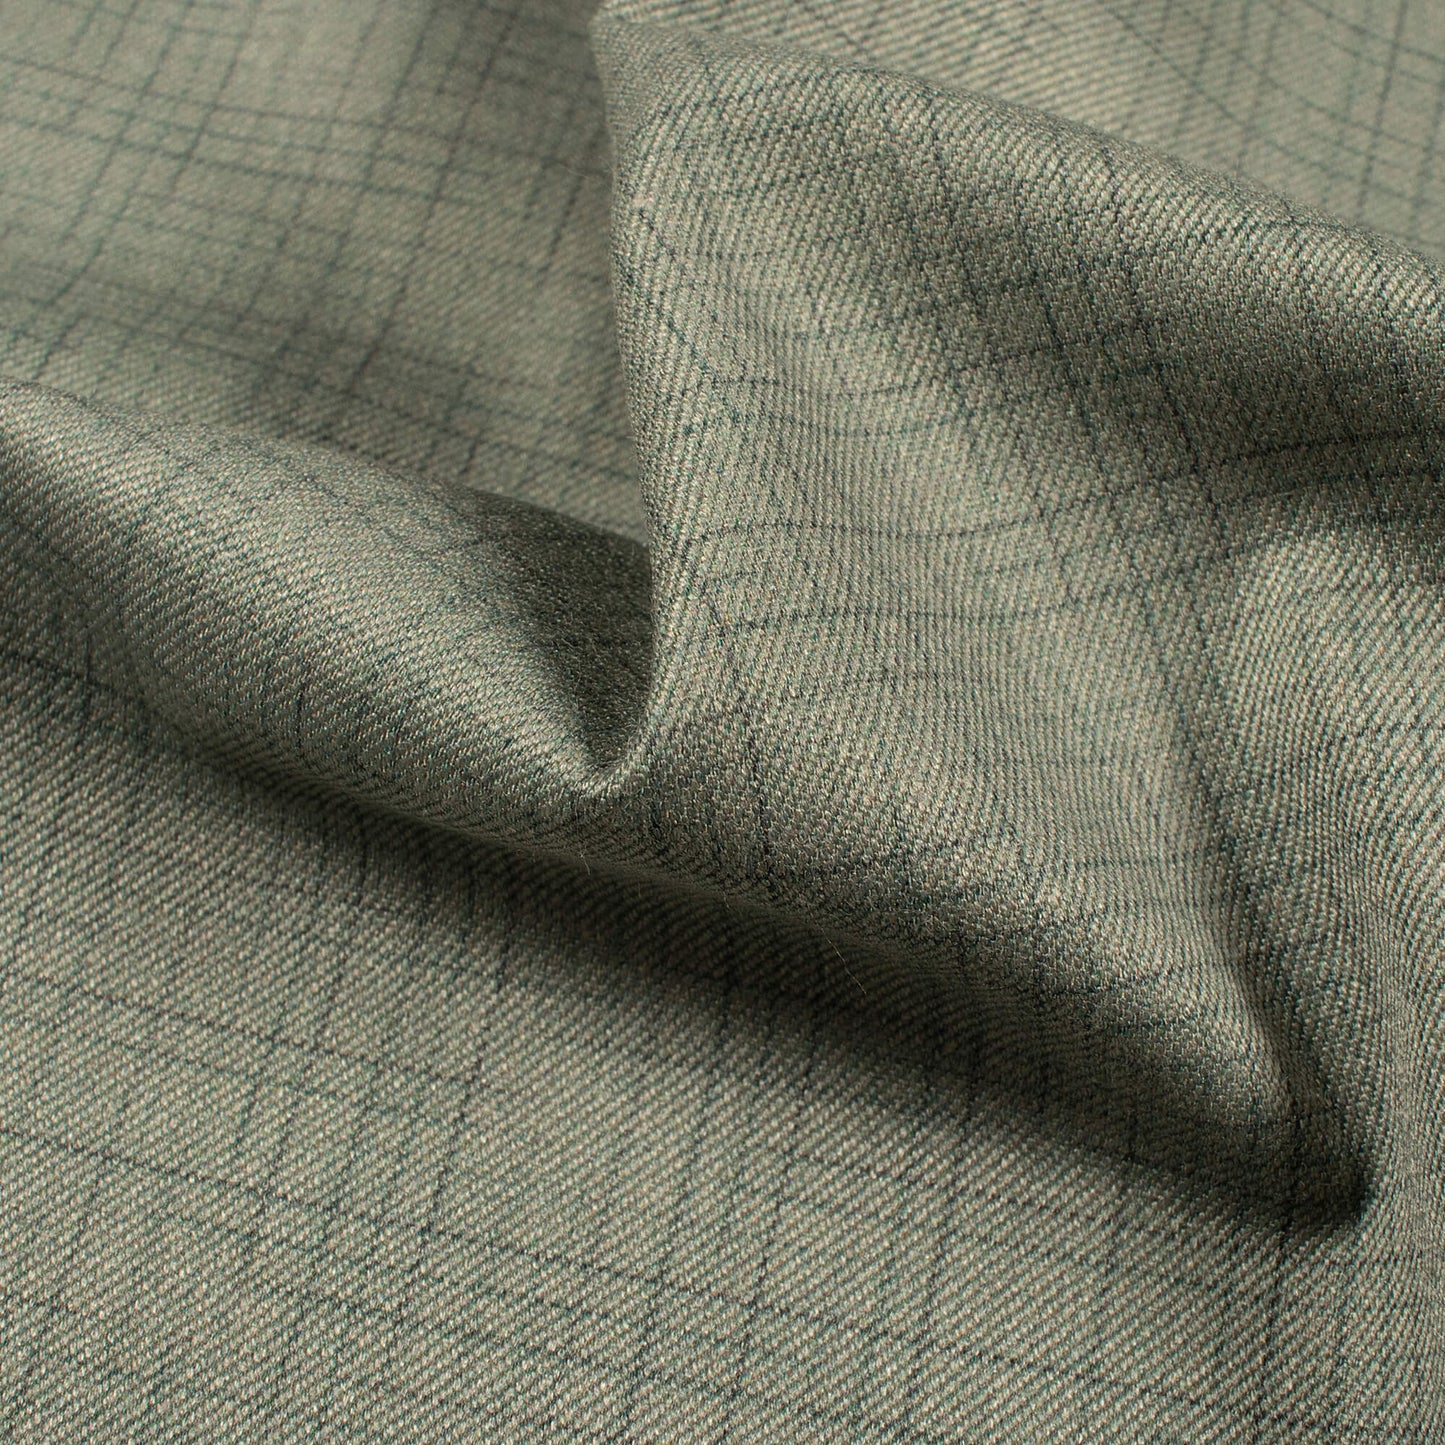 Laurel Green Checks Printed Luxury Suiting Fabric